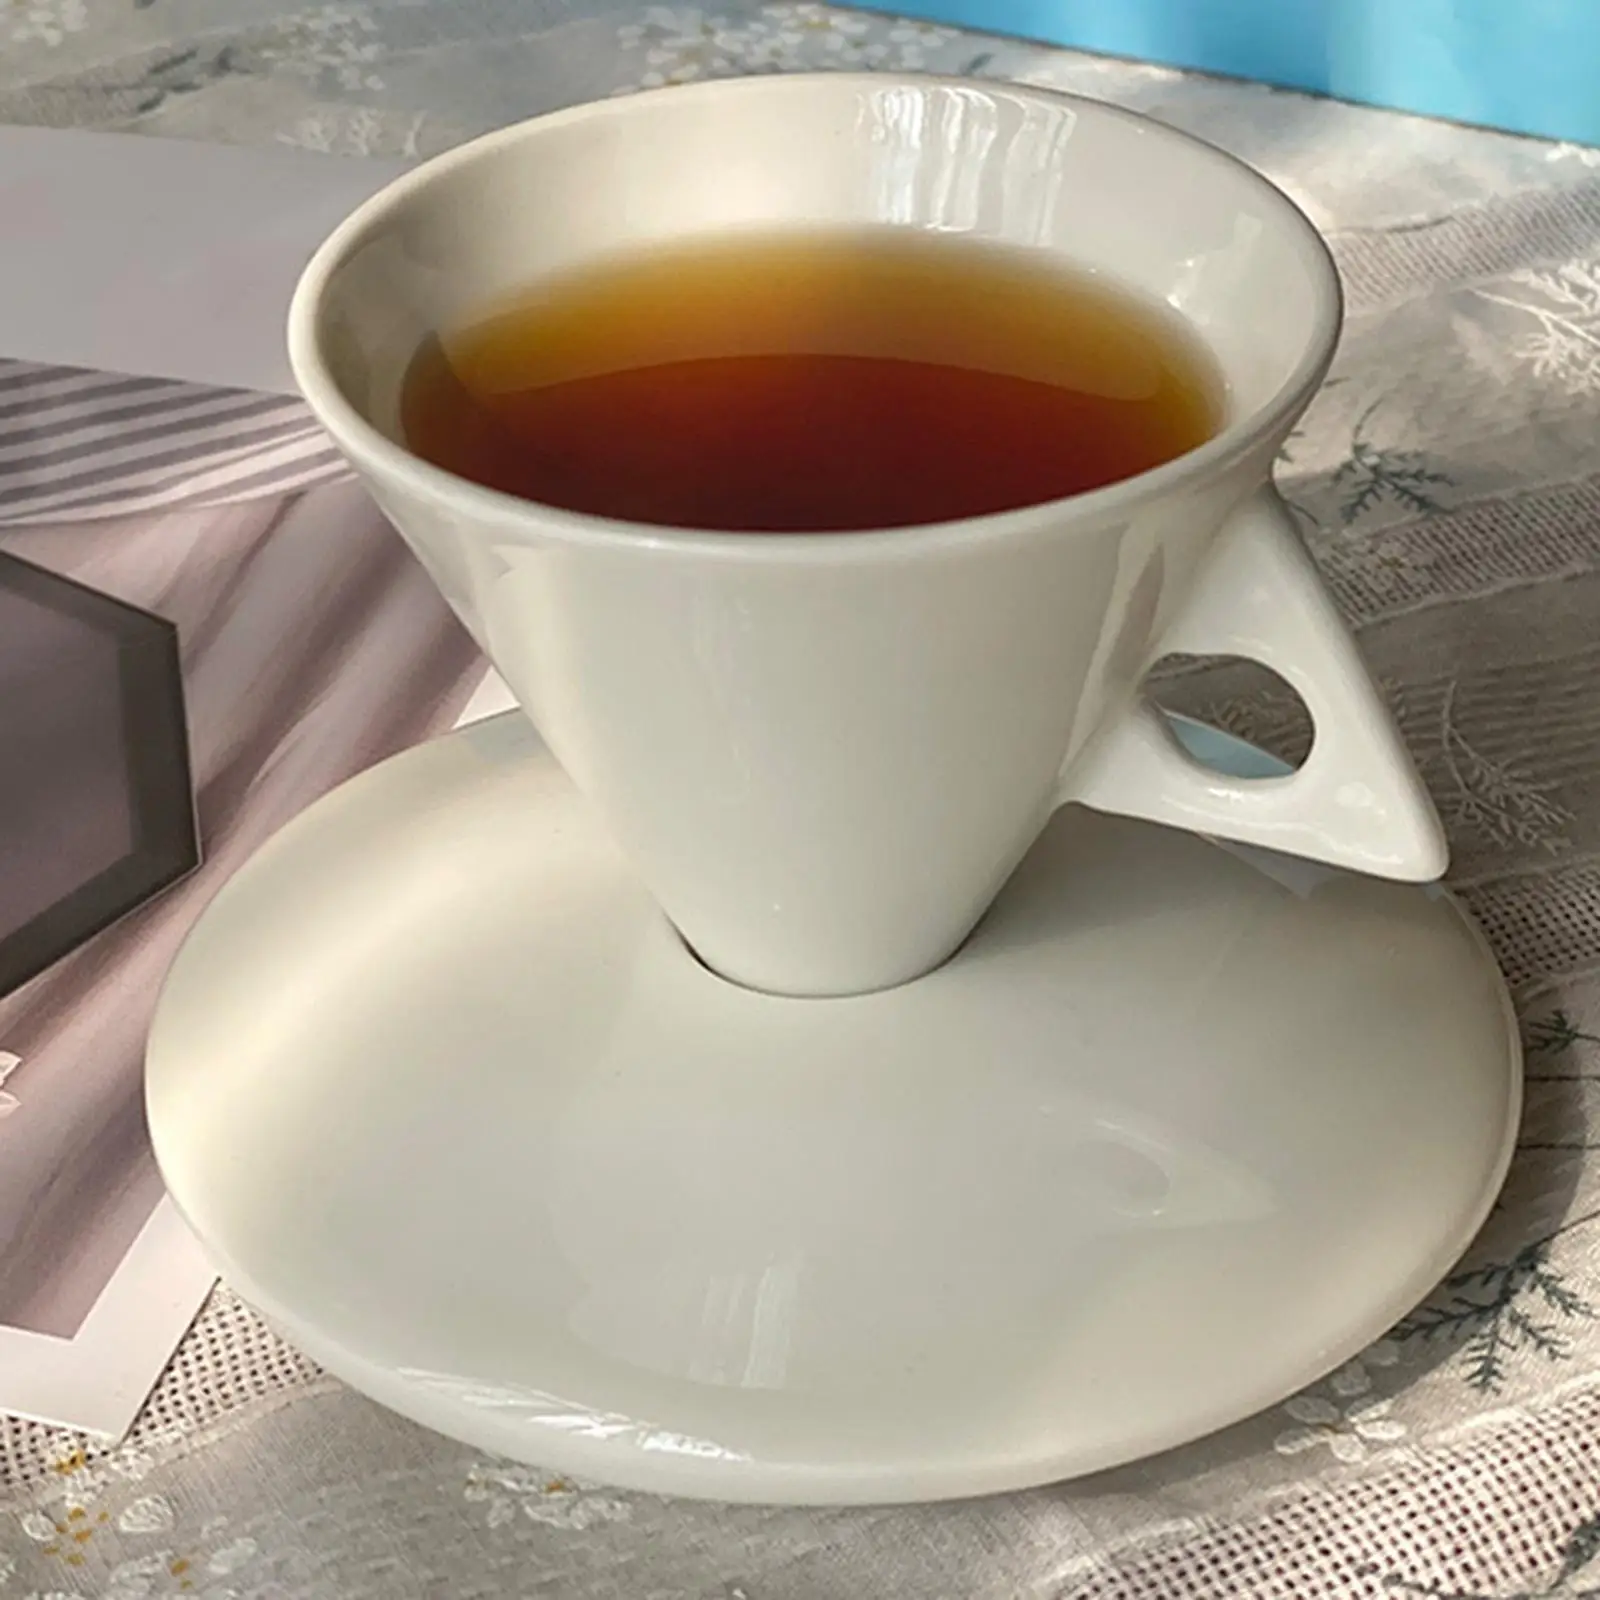 Pyramid Coffee Mug and Saucer Set Teacup Personalized Drinkware 60ml Coffee Cup and Saucer Set for Latte Cappuccino Milk